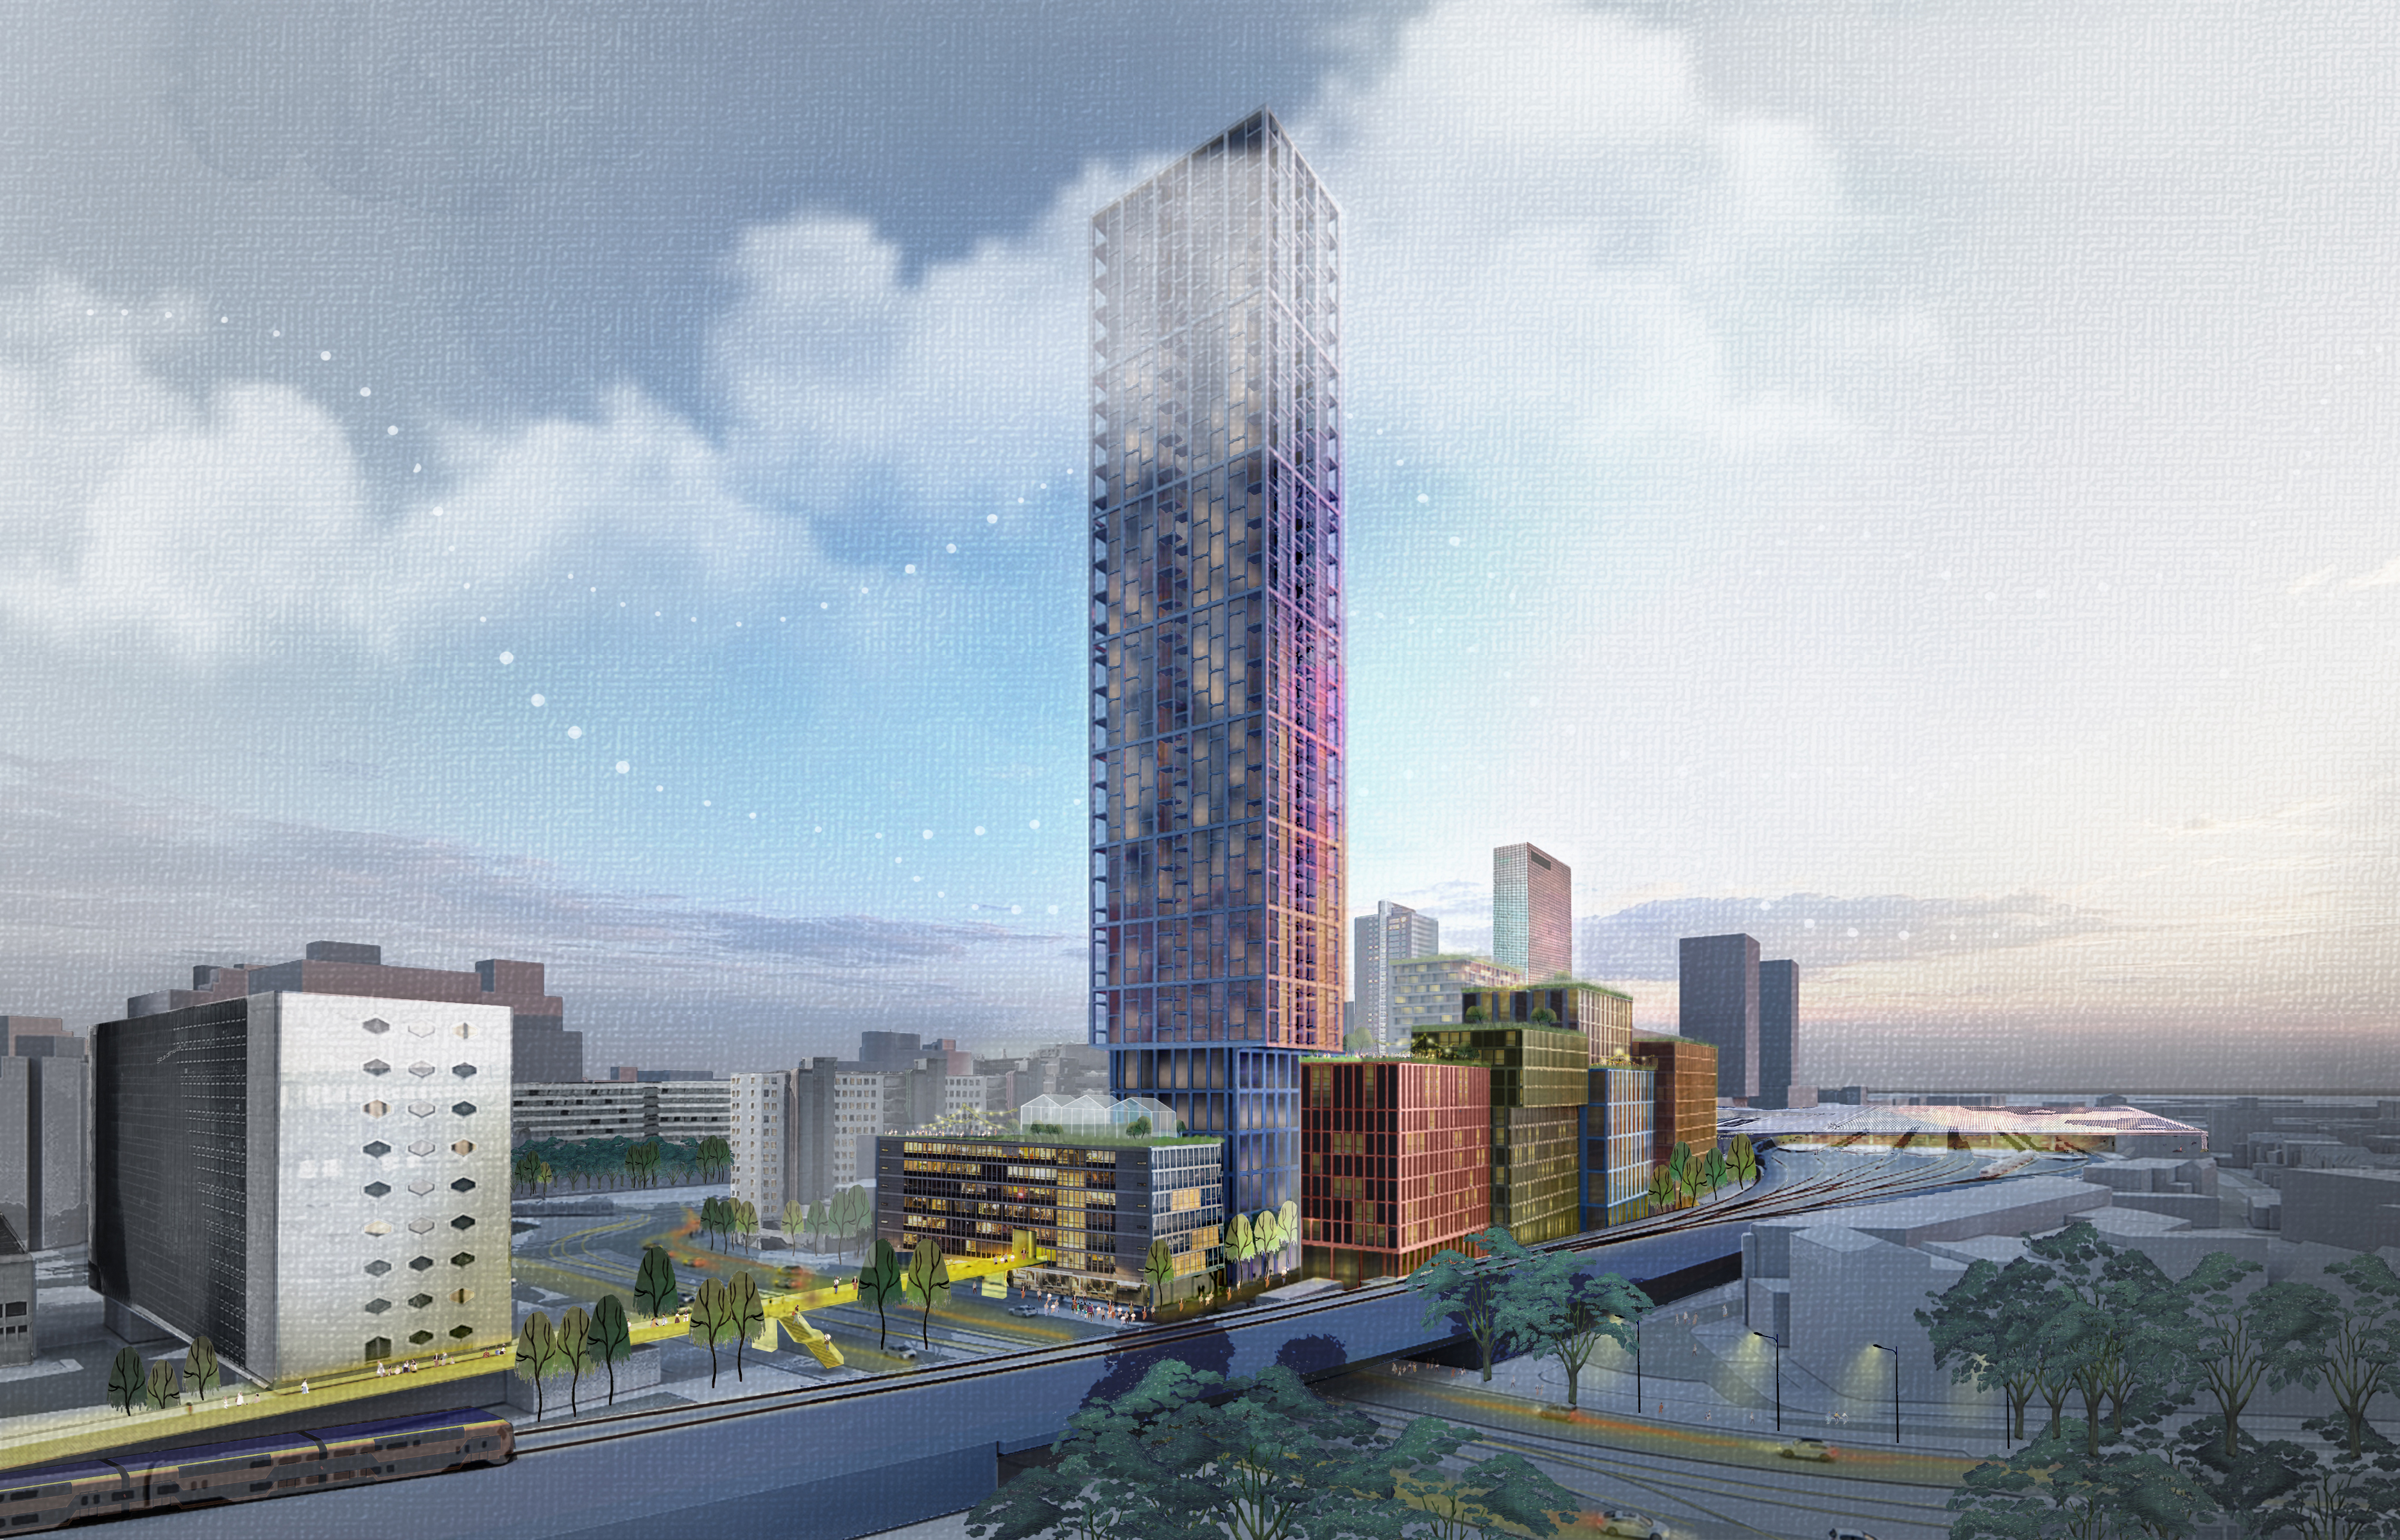 Rotterdam’s City Council confirmed the zoning plan for Schiekadeblok